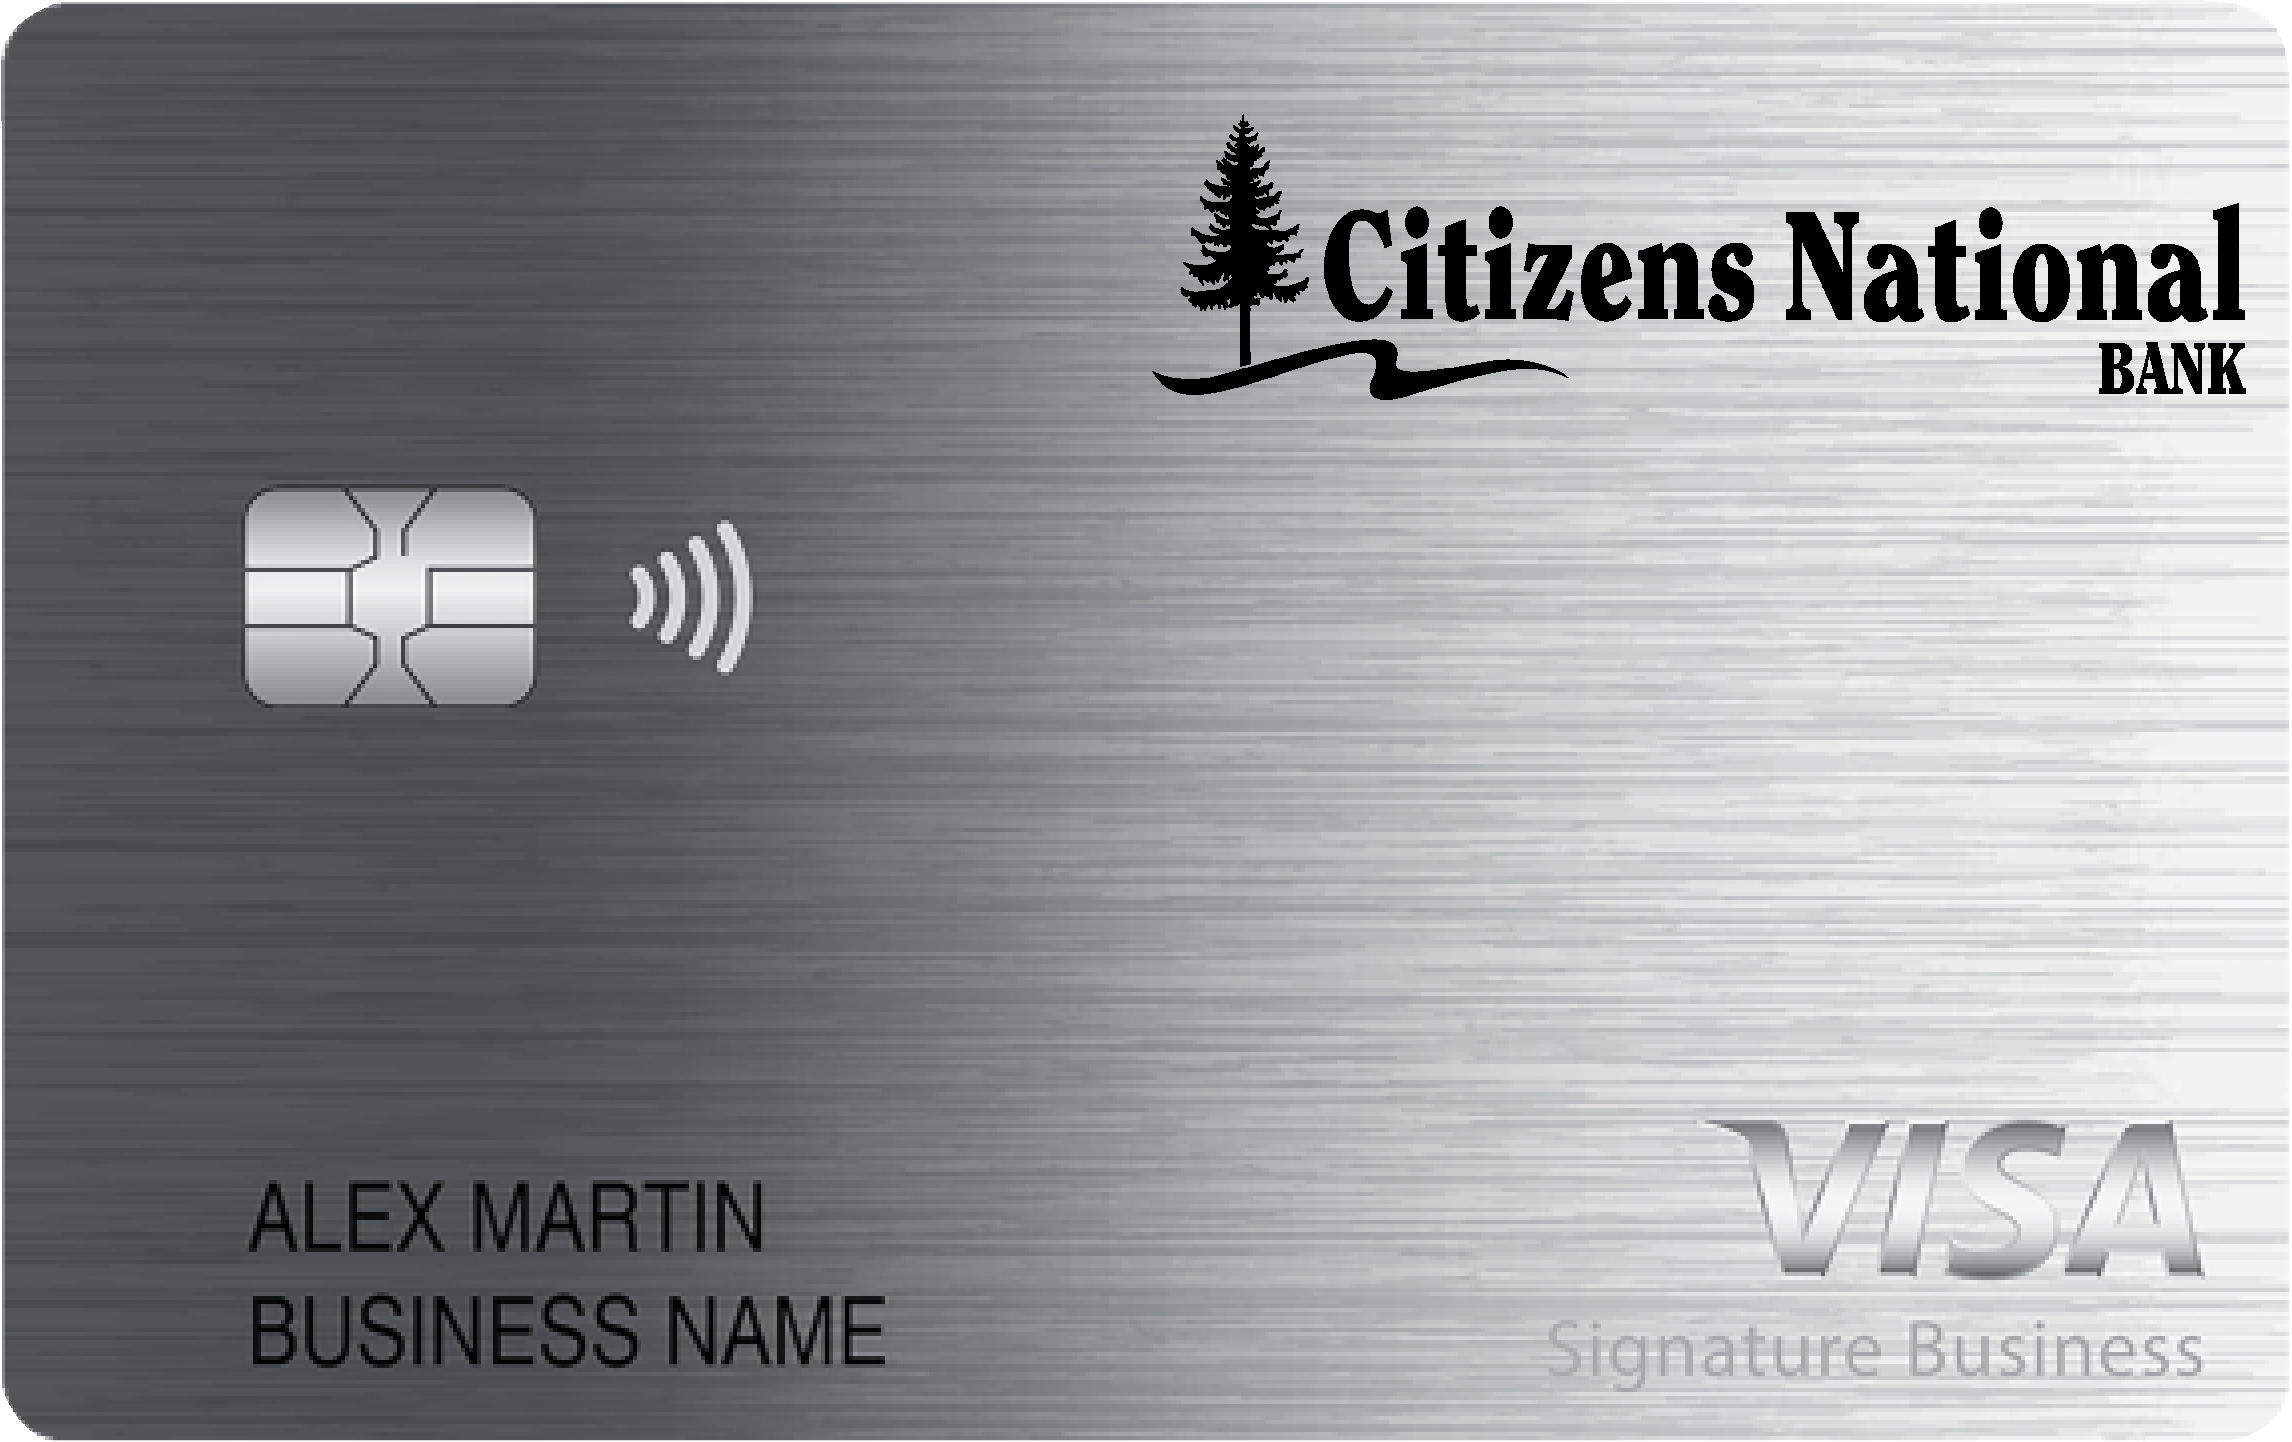 Citizens National Bank Smart Business Rewards Card